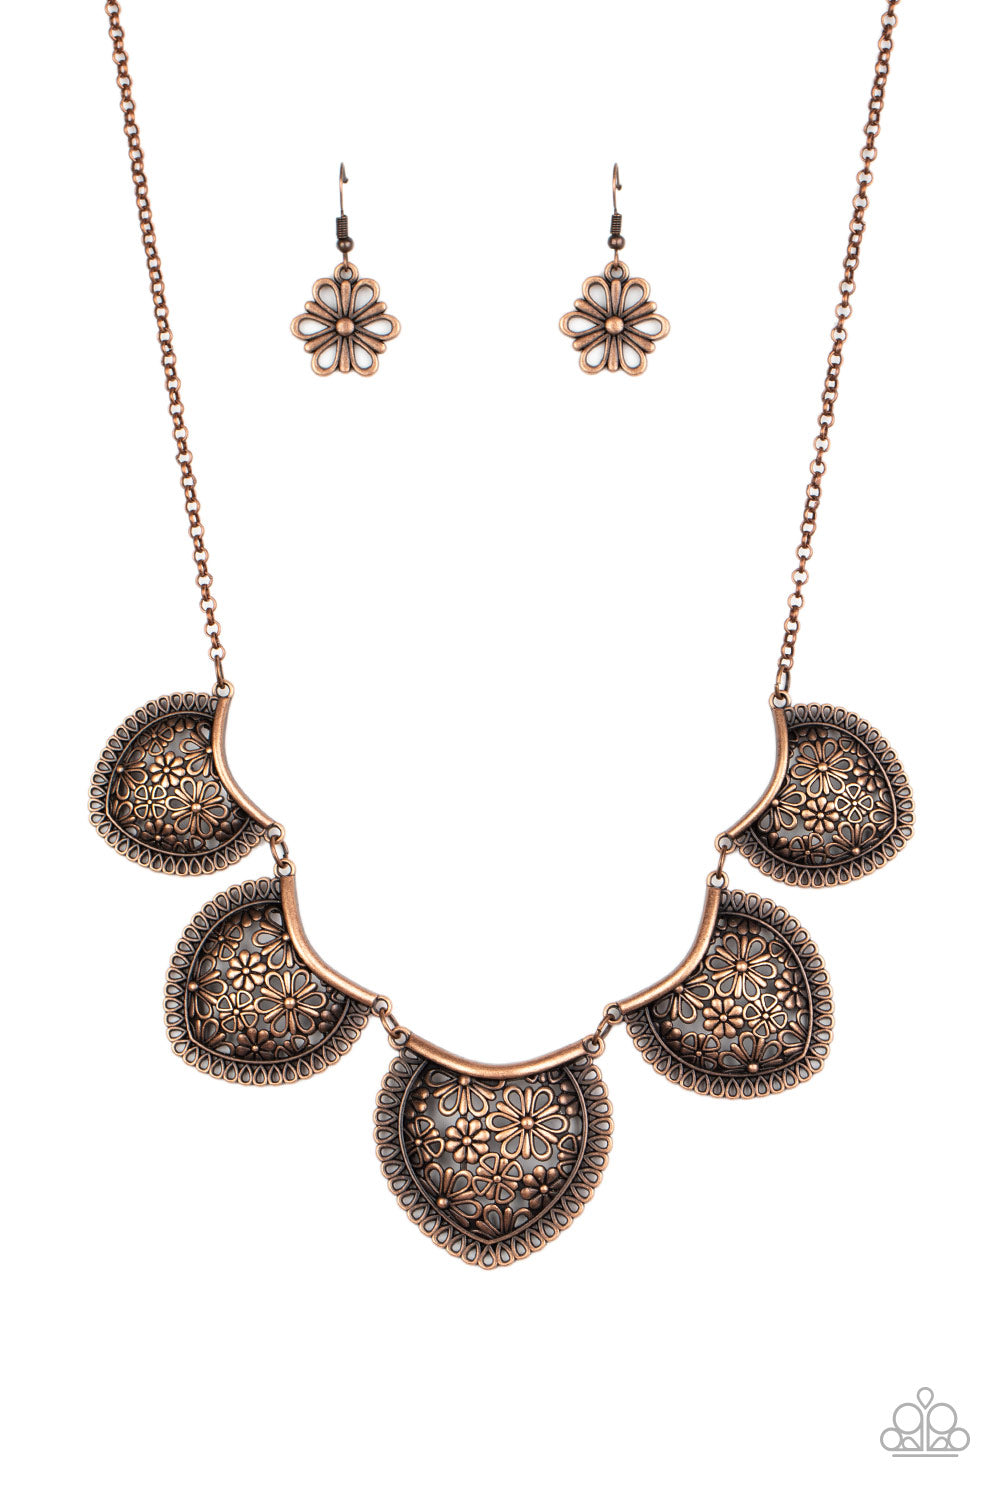 Paparazzi Accessories - Garden Pixie - Copper Necklace - Alies Bling Bar